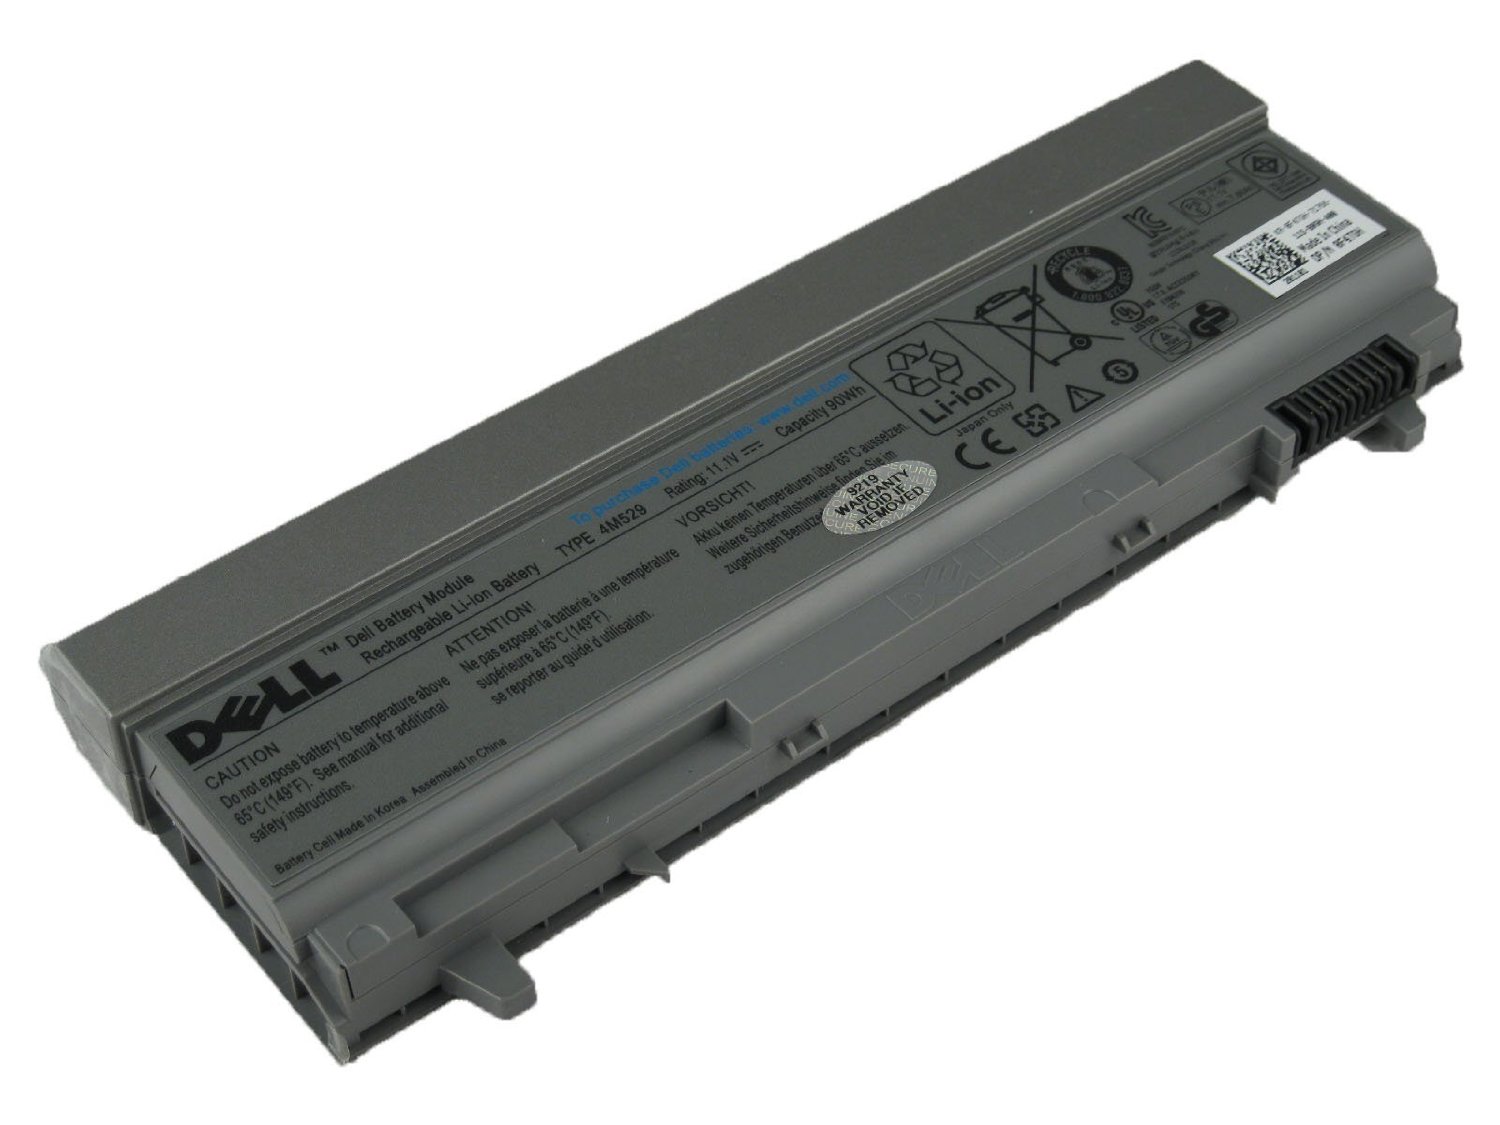 NEW Dell OEM Original Latitude E6400 E6410 / E6500 E6510 90Wh 9-cell Laptop Battery.